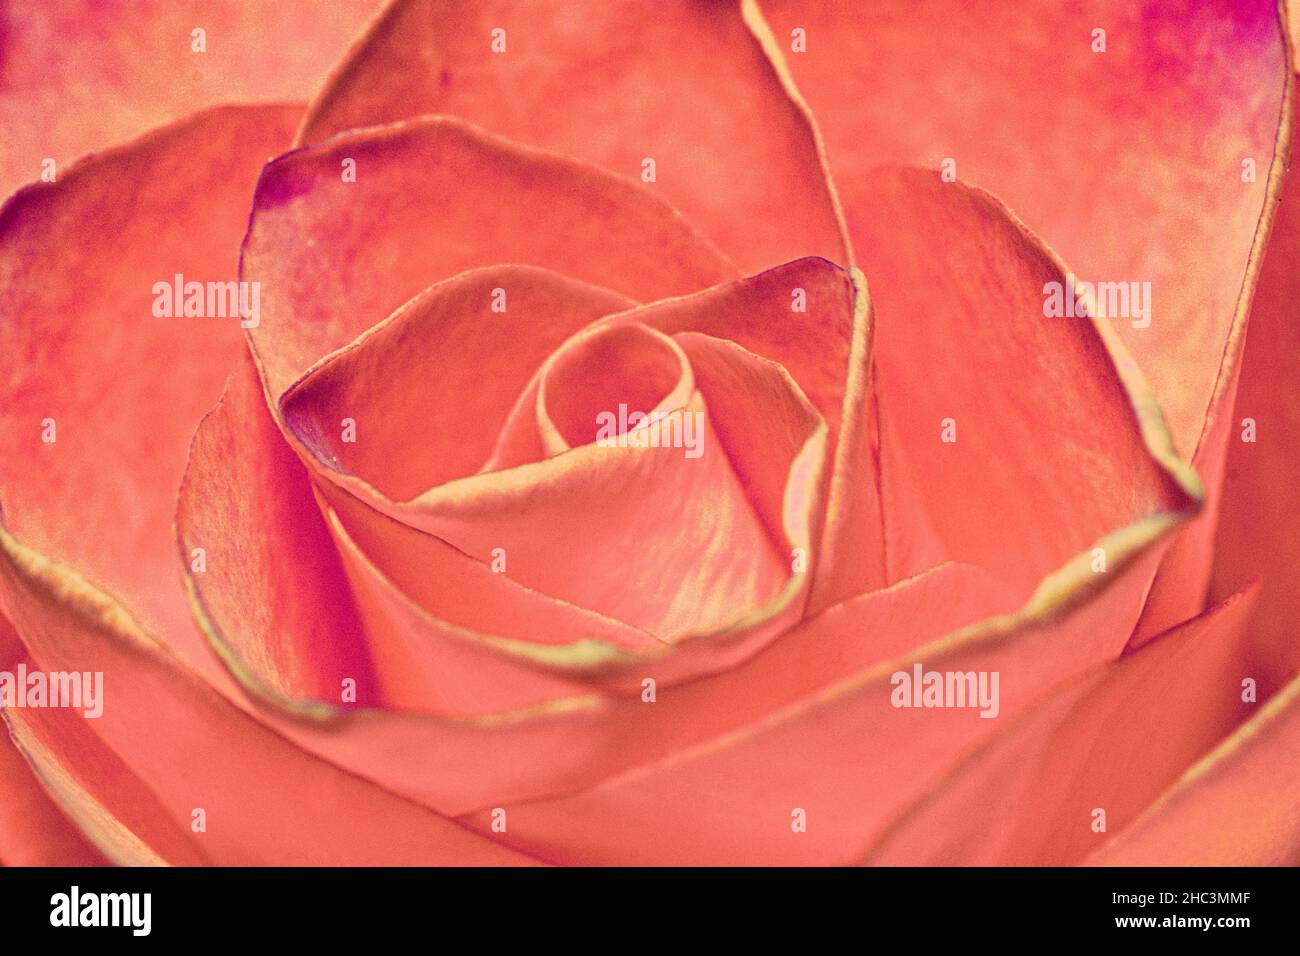 Rosenblüte einzeln cremfarbig - rot Stock Photo